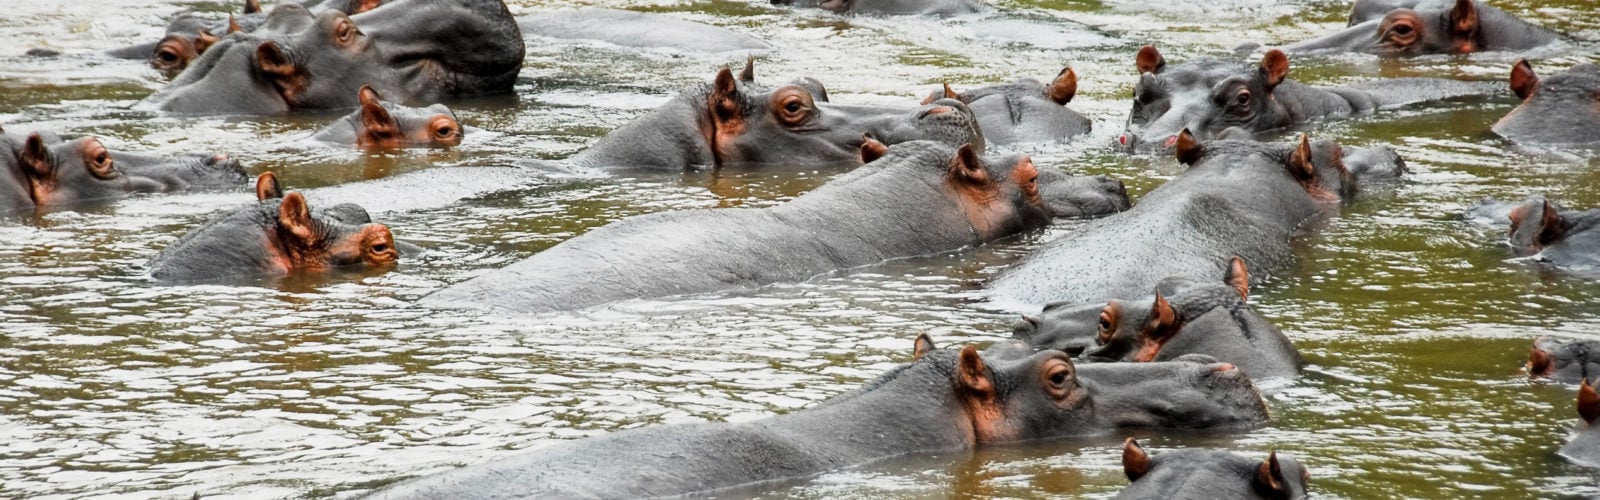 Hippos, Ishasha river, Queen Elizabeth National Park, Uganda